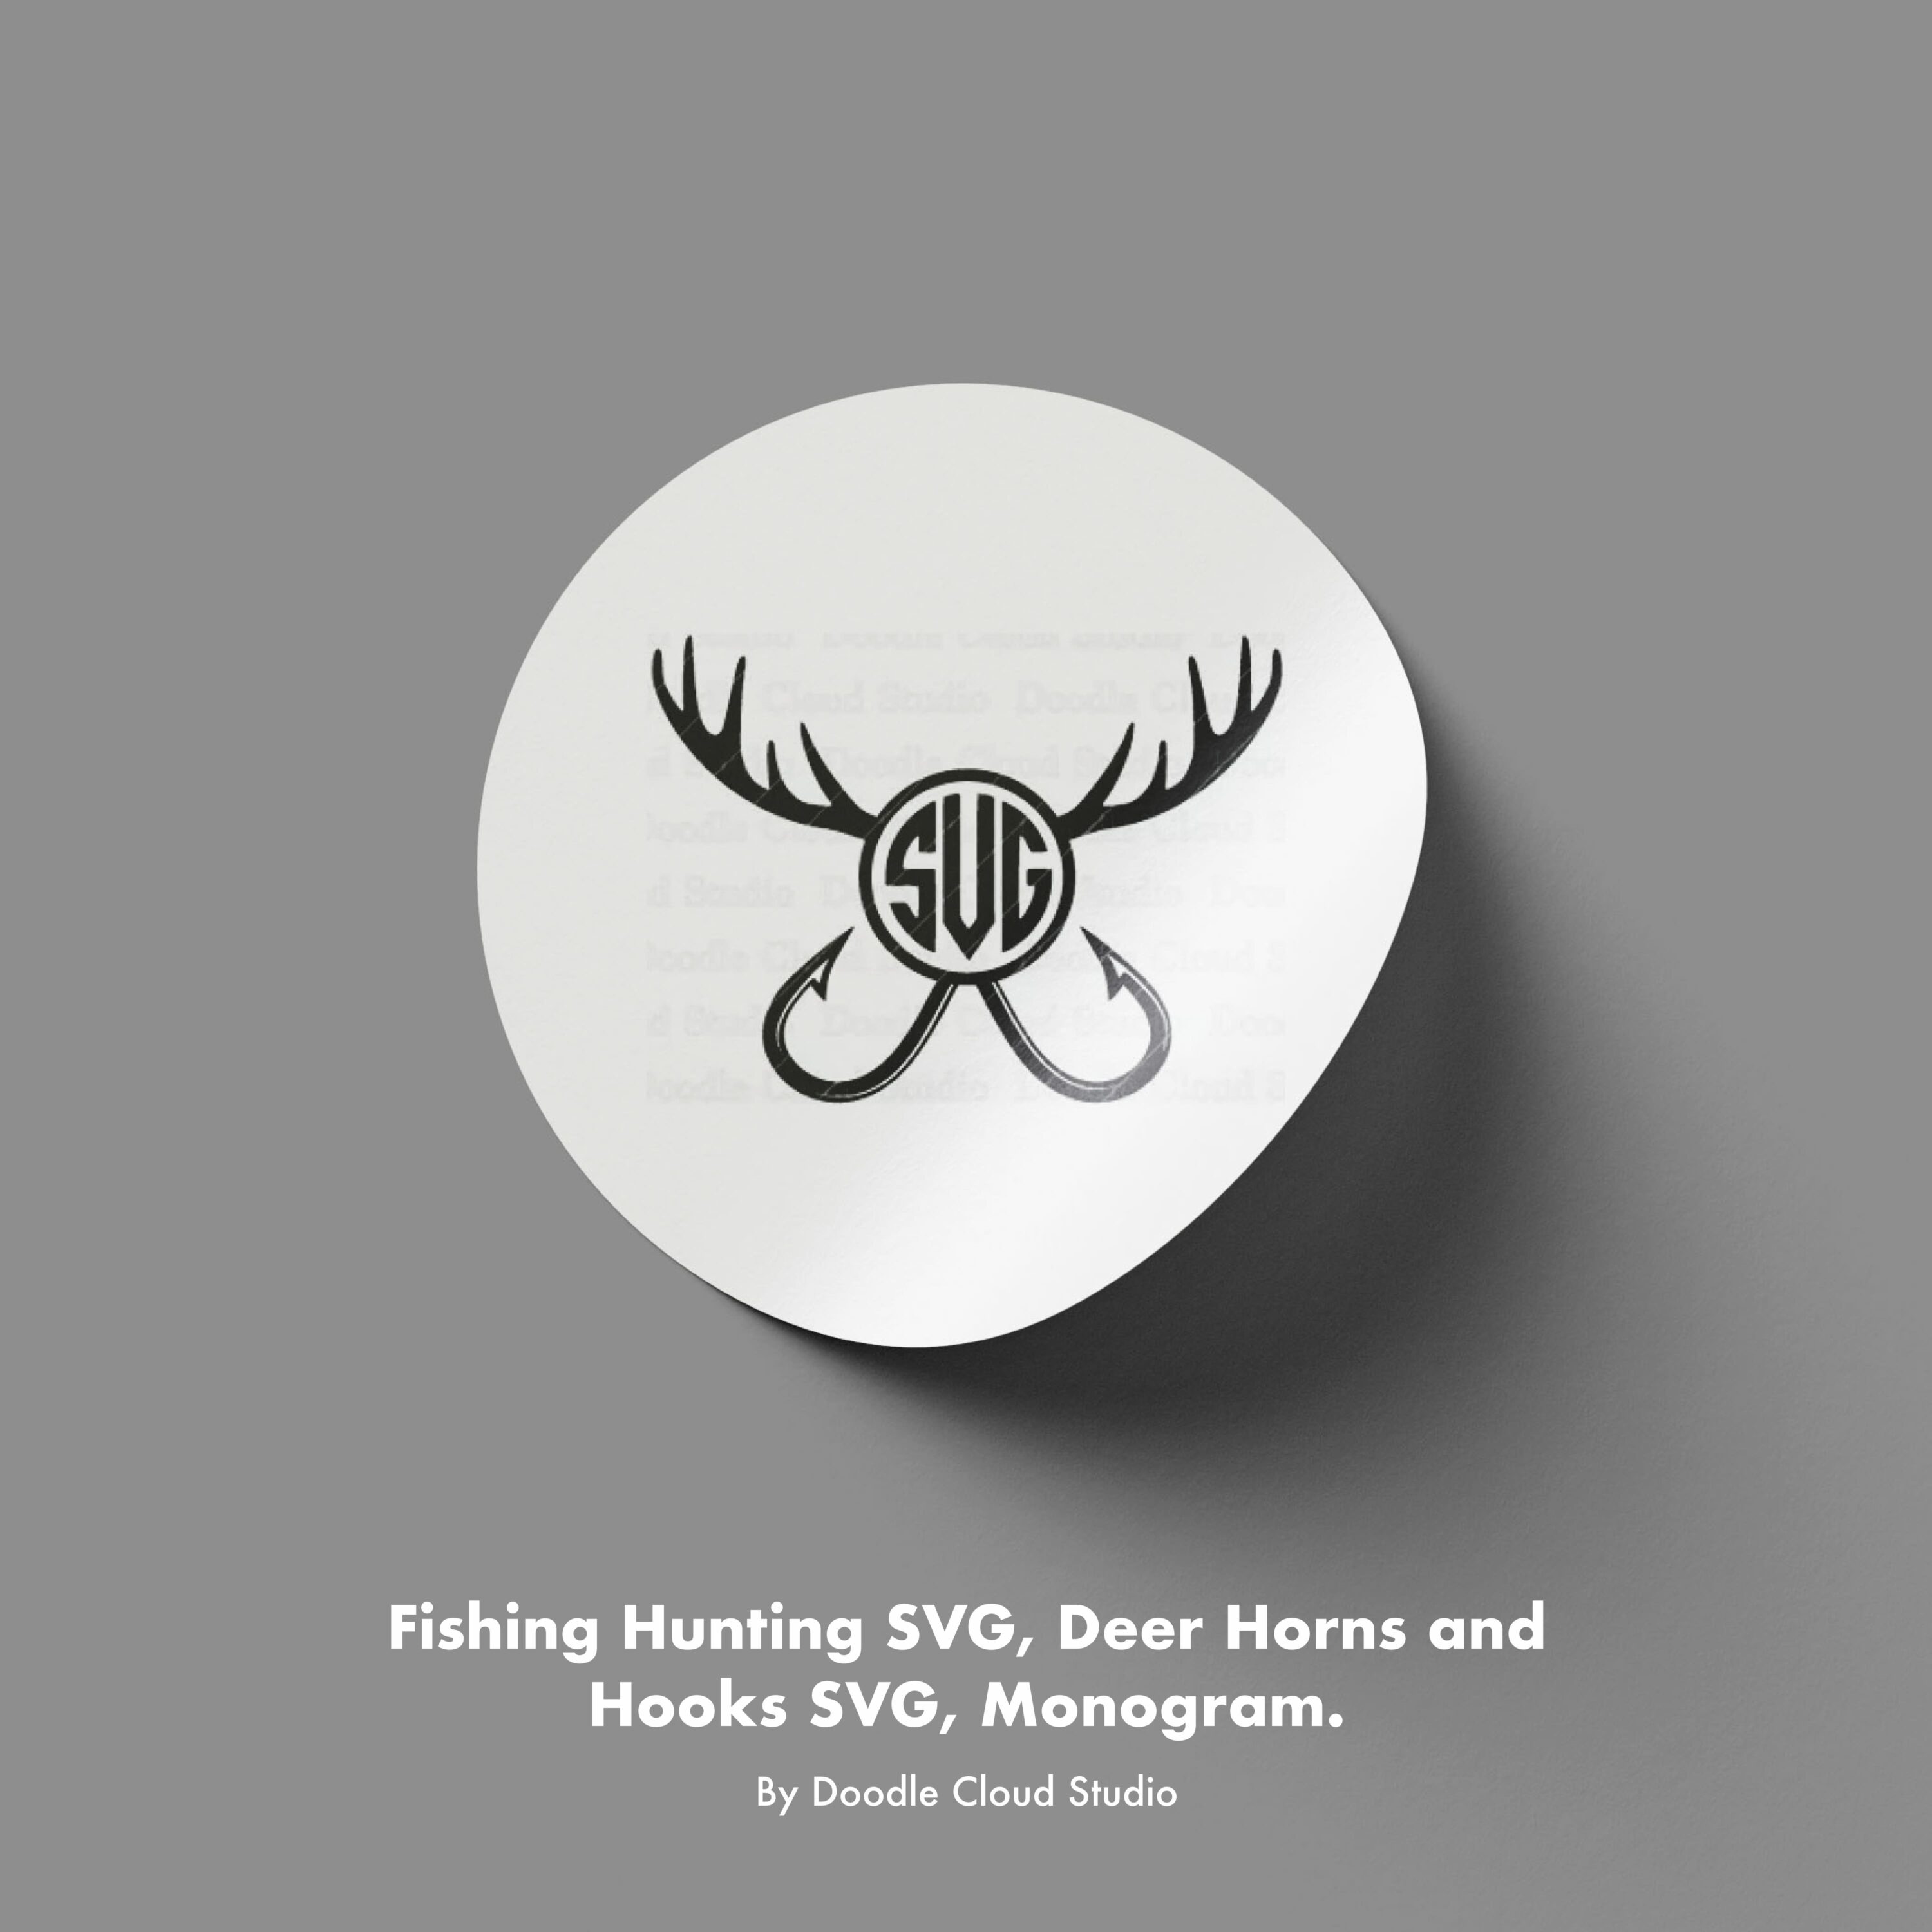 Fishing Hunting SVG, Deer Horns and Hooks SVG, Monogram. cover.